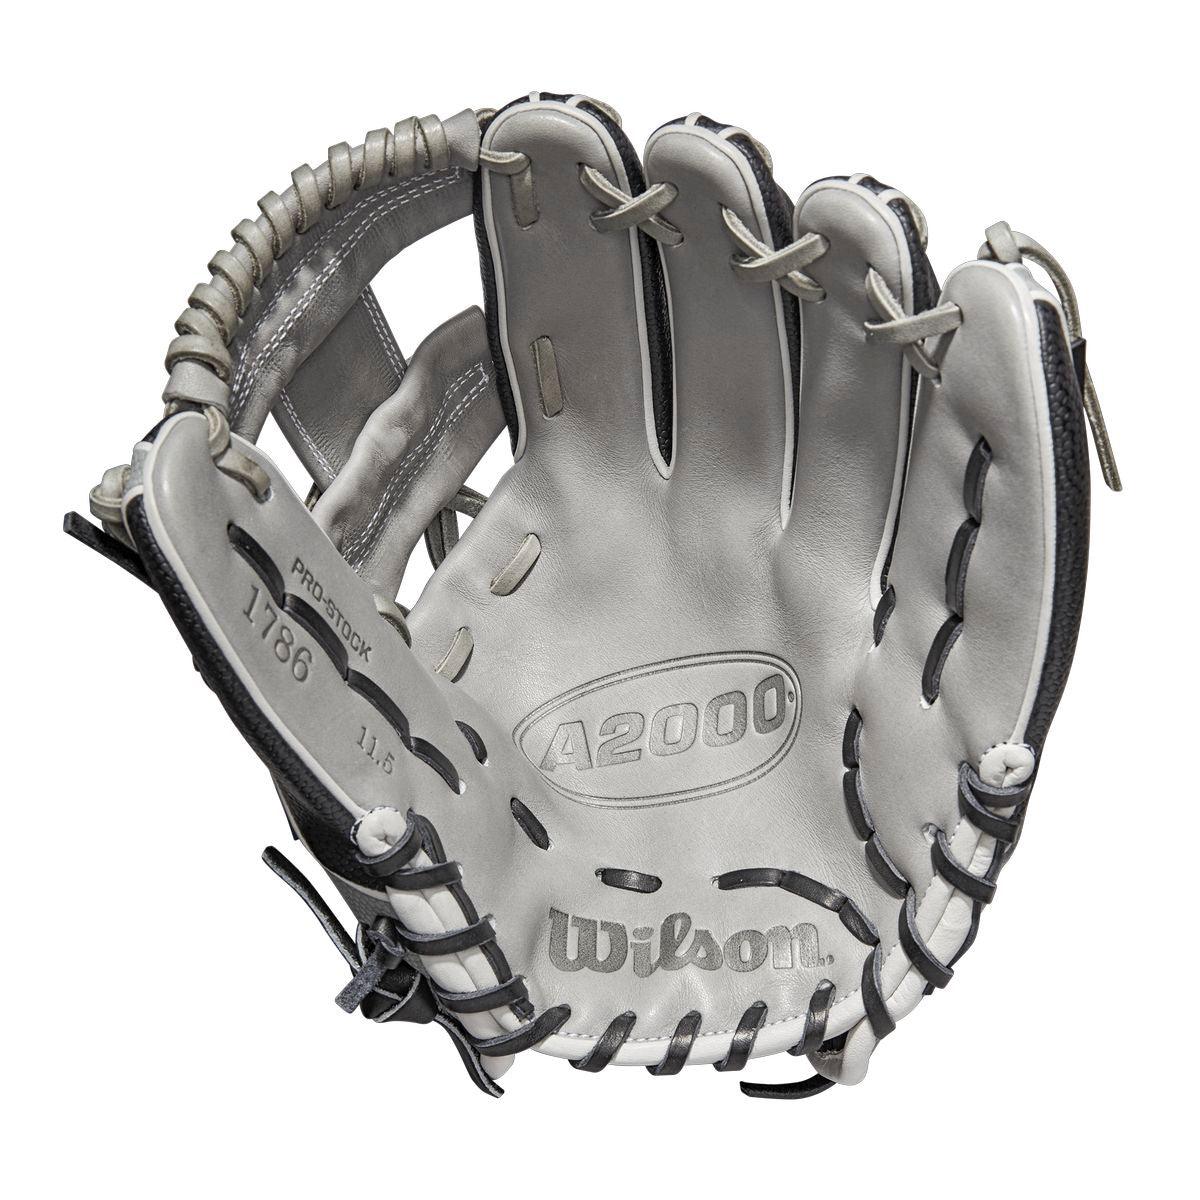 A2000 1786SS 11.5" Senior Baseball Glove (R-H Throw) - Sports Excellence